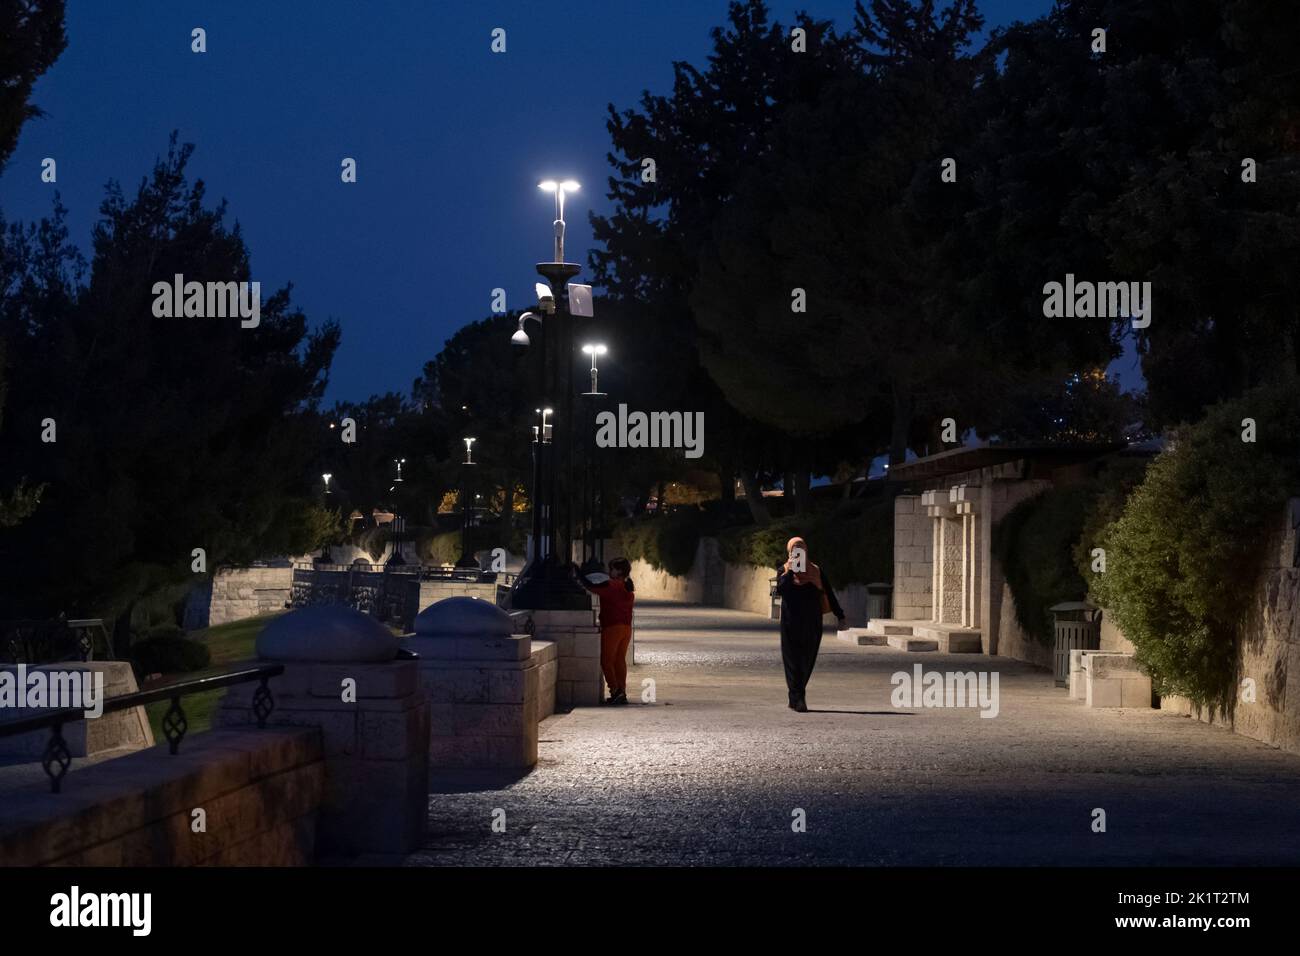 Palestinians walk at night in the Tayelet Haas Promenade in Armon Hanatziv in Jerusalem Israel Stock Photo